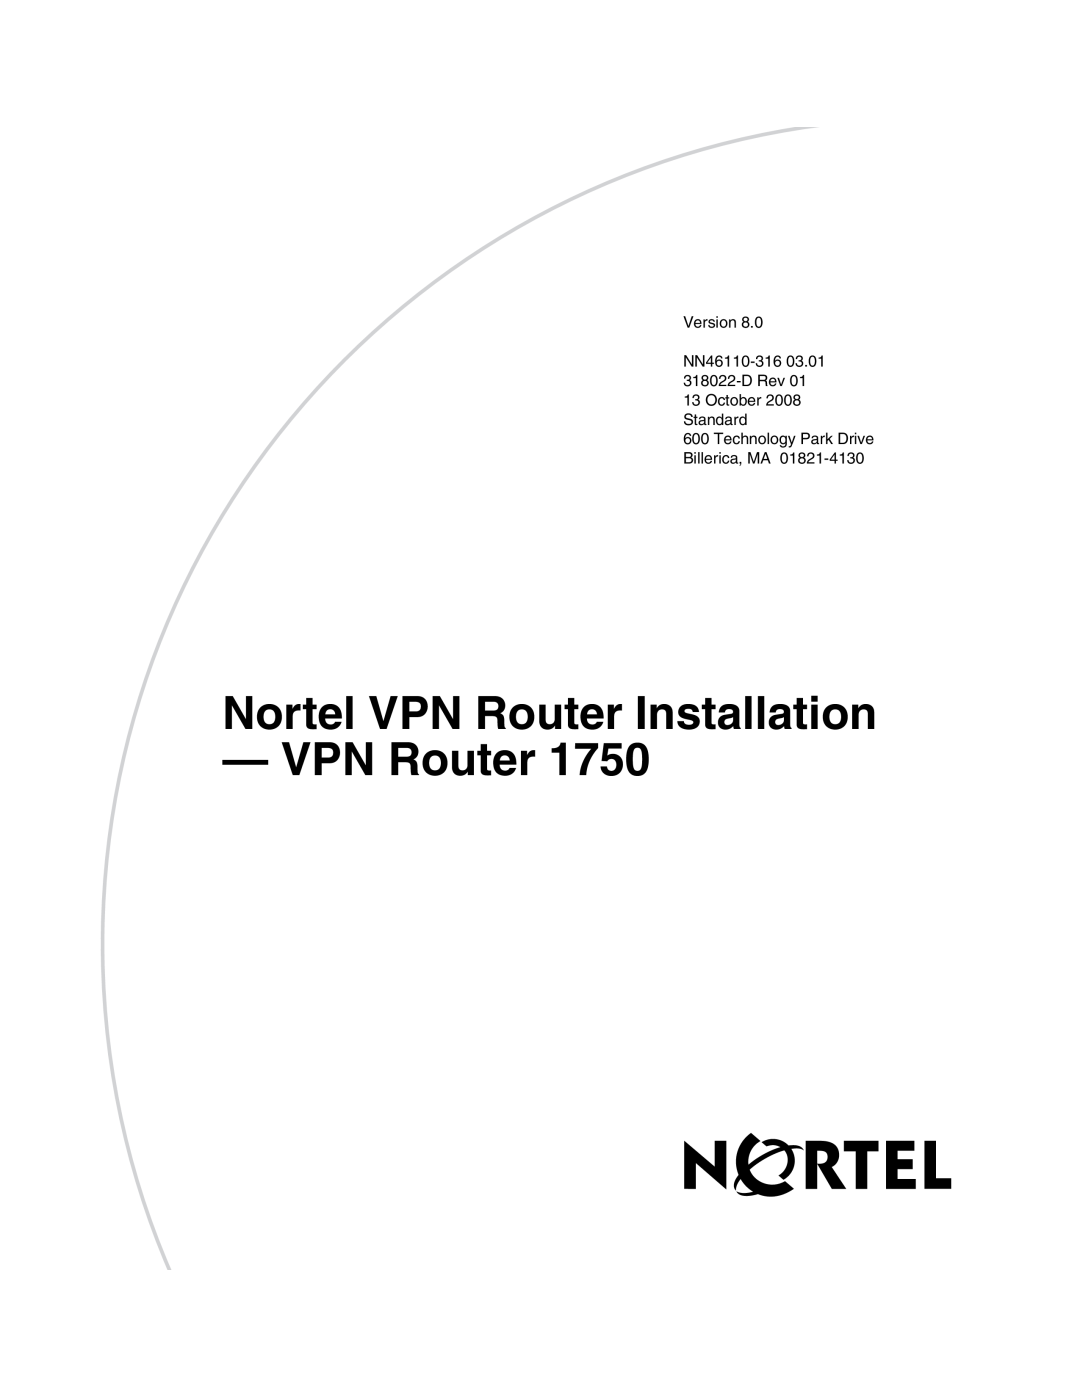 Nortel Networks 1750 manual Nortel VPN Router Installation VPN Router, Technology Park Drive Billerica, MA 